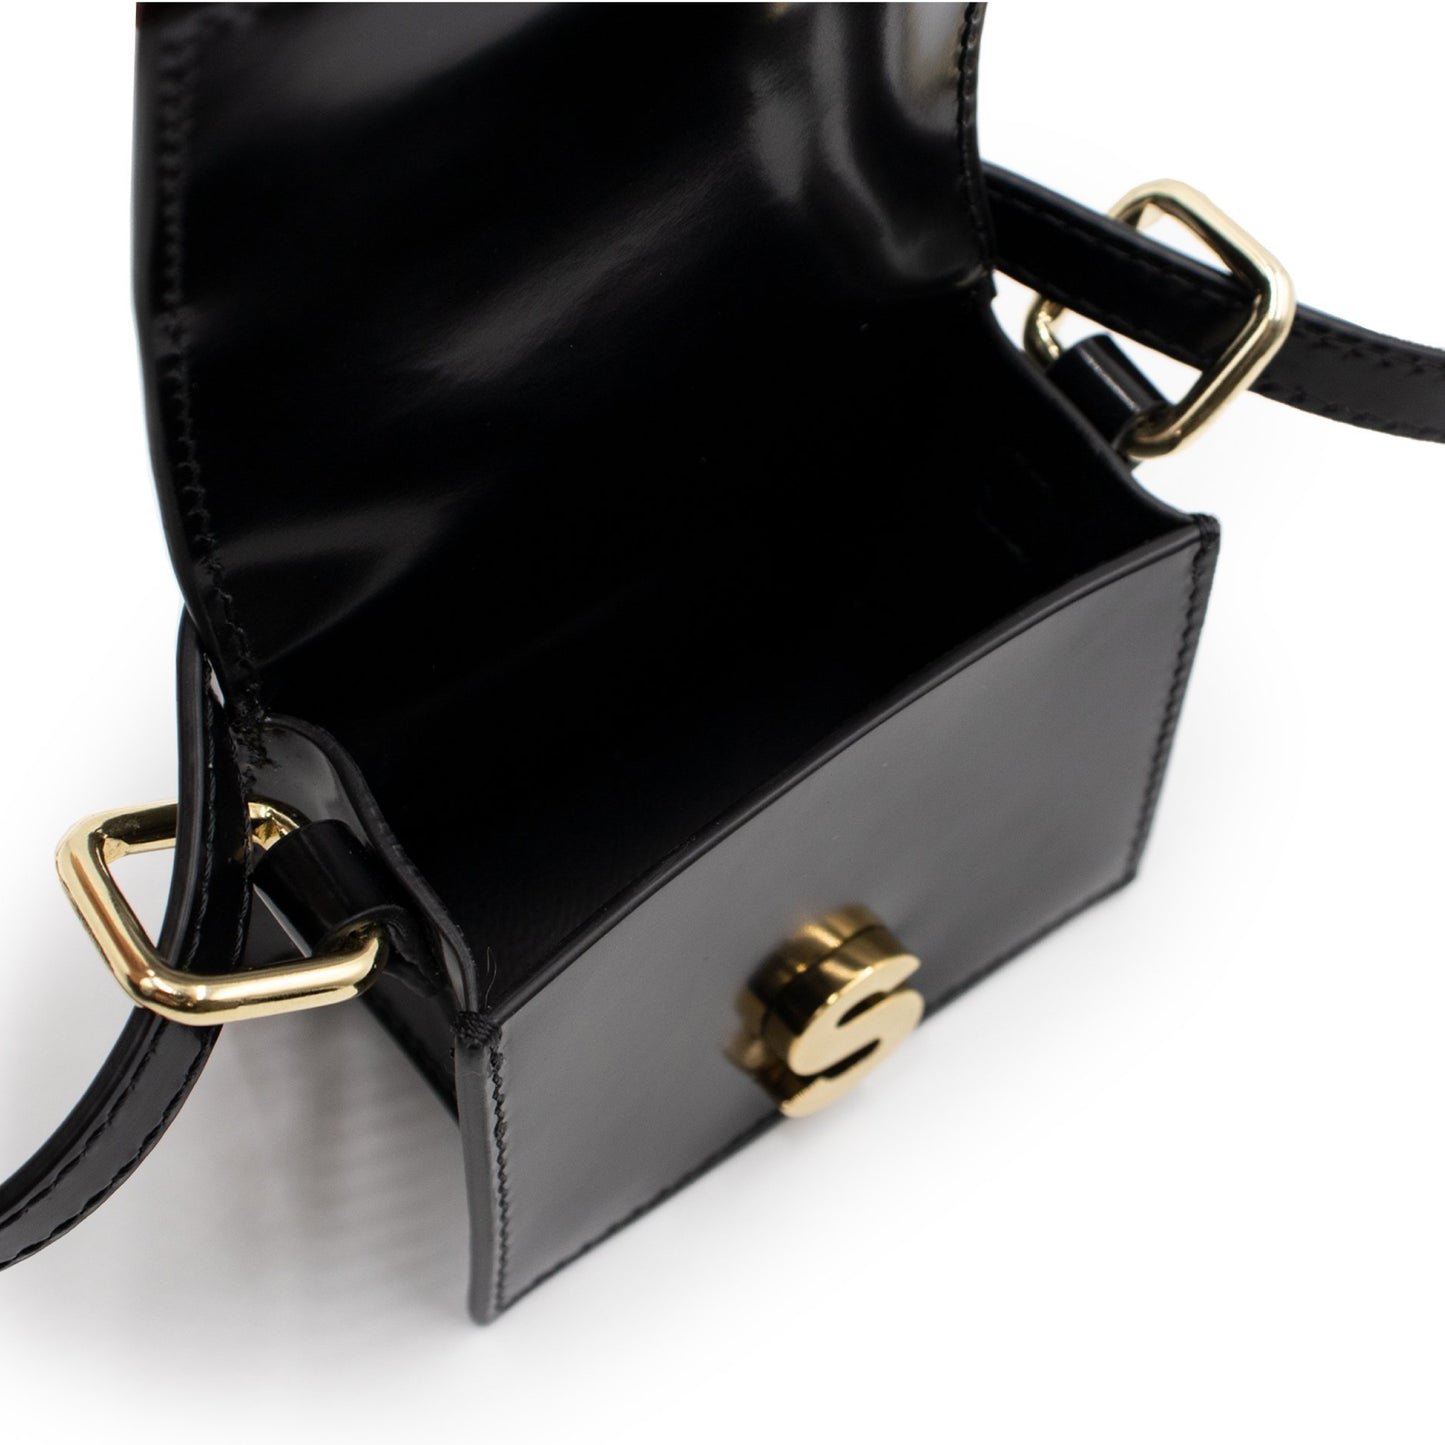 Micro Satchel Bag in Black